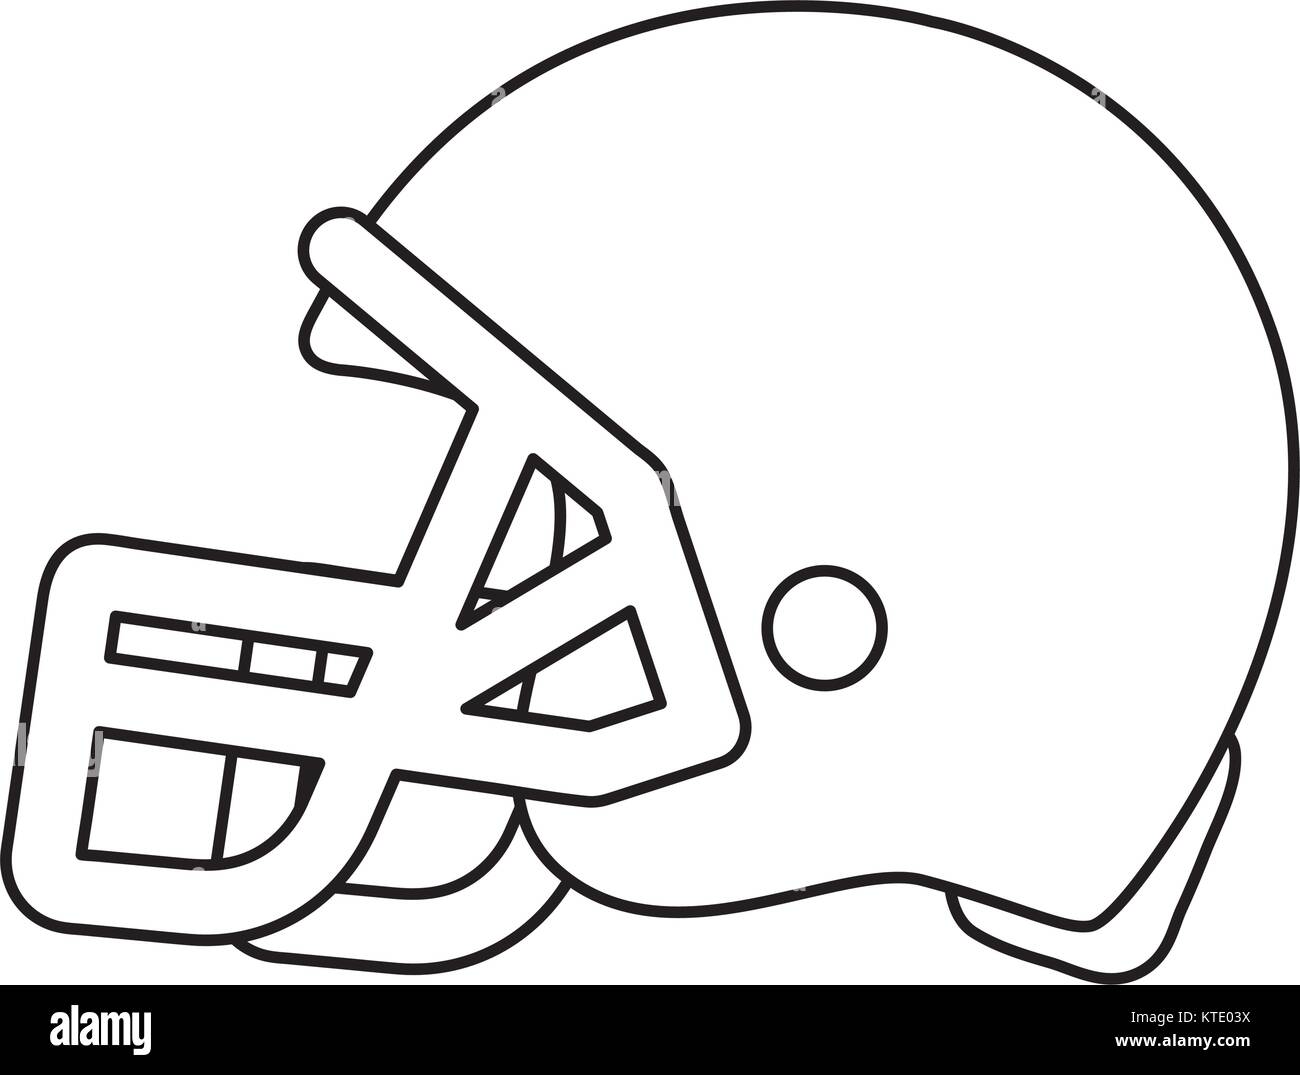 rigidez Naturaleza Médico Ilustración vectorial de cascos de fútbol americano Imagen Vector de stock  - Alamy